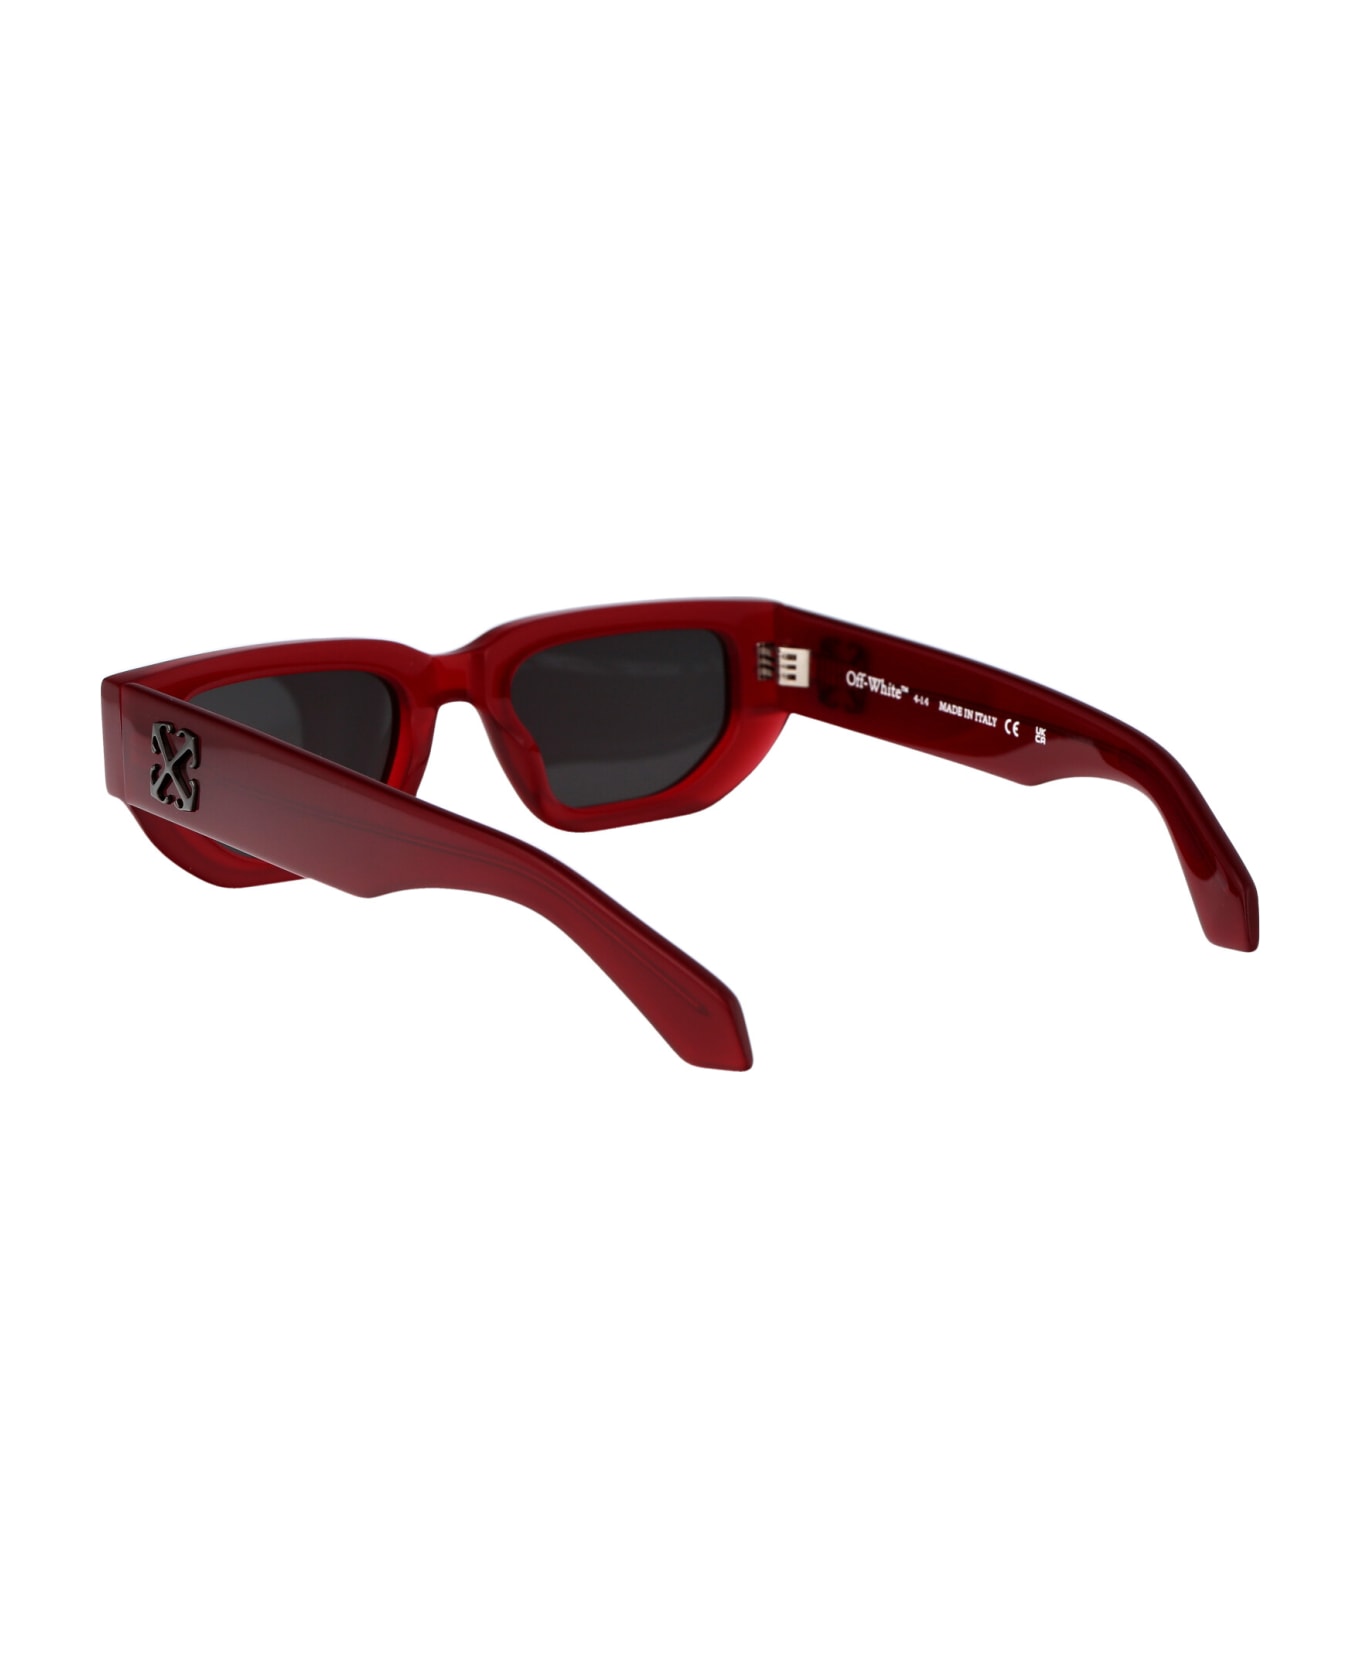 Off-White Greeley Sunglasses - 2807 BURGUNDY 